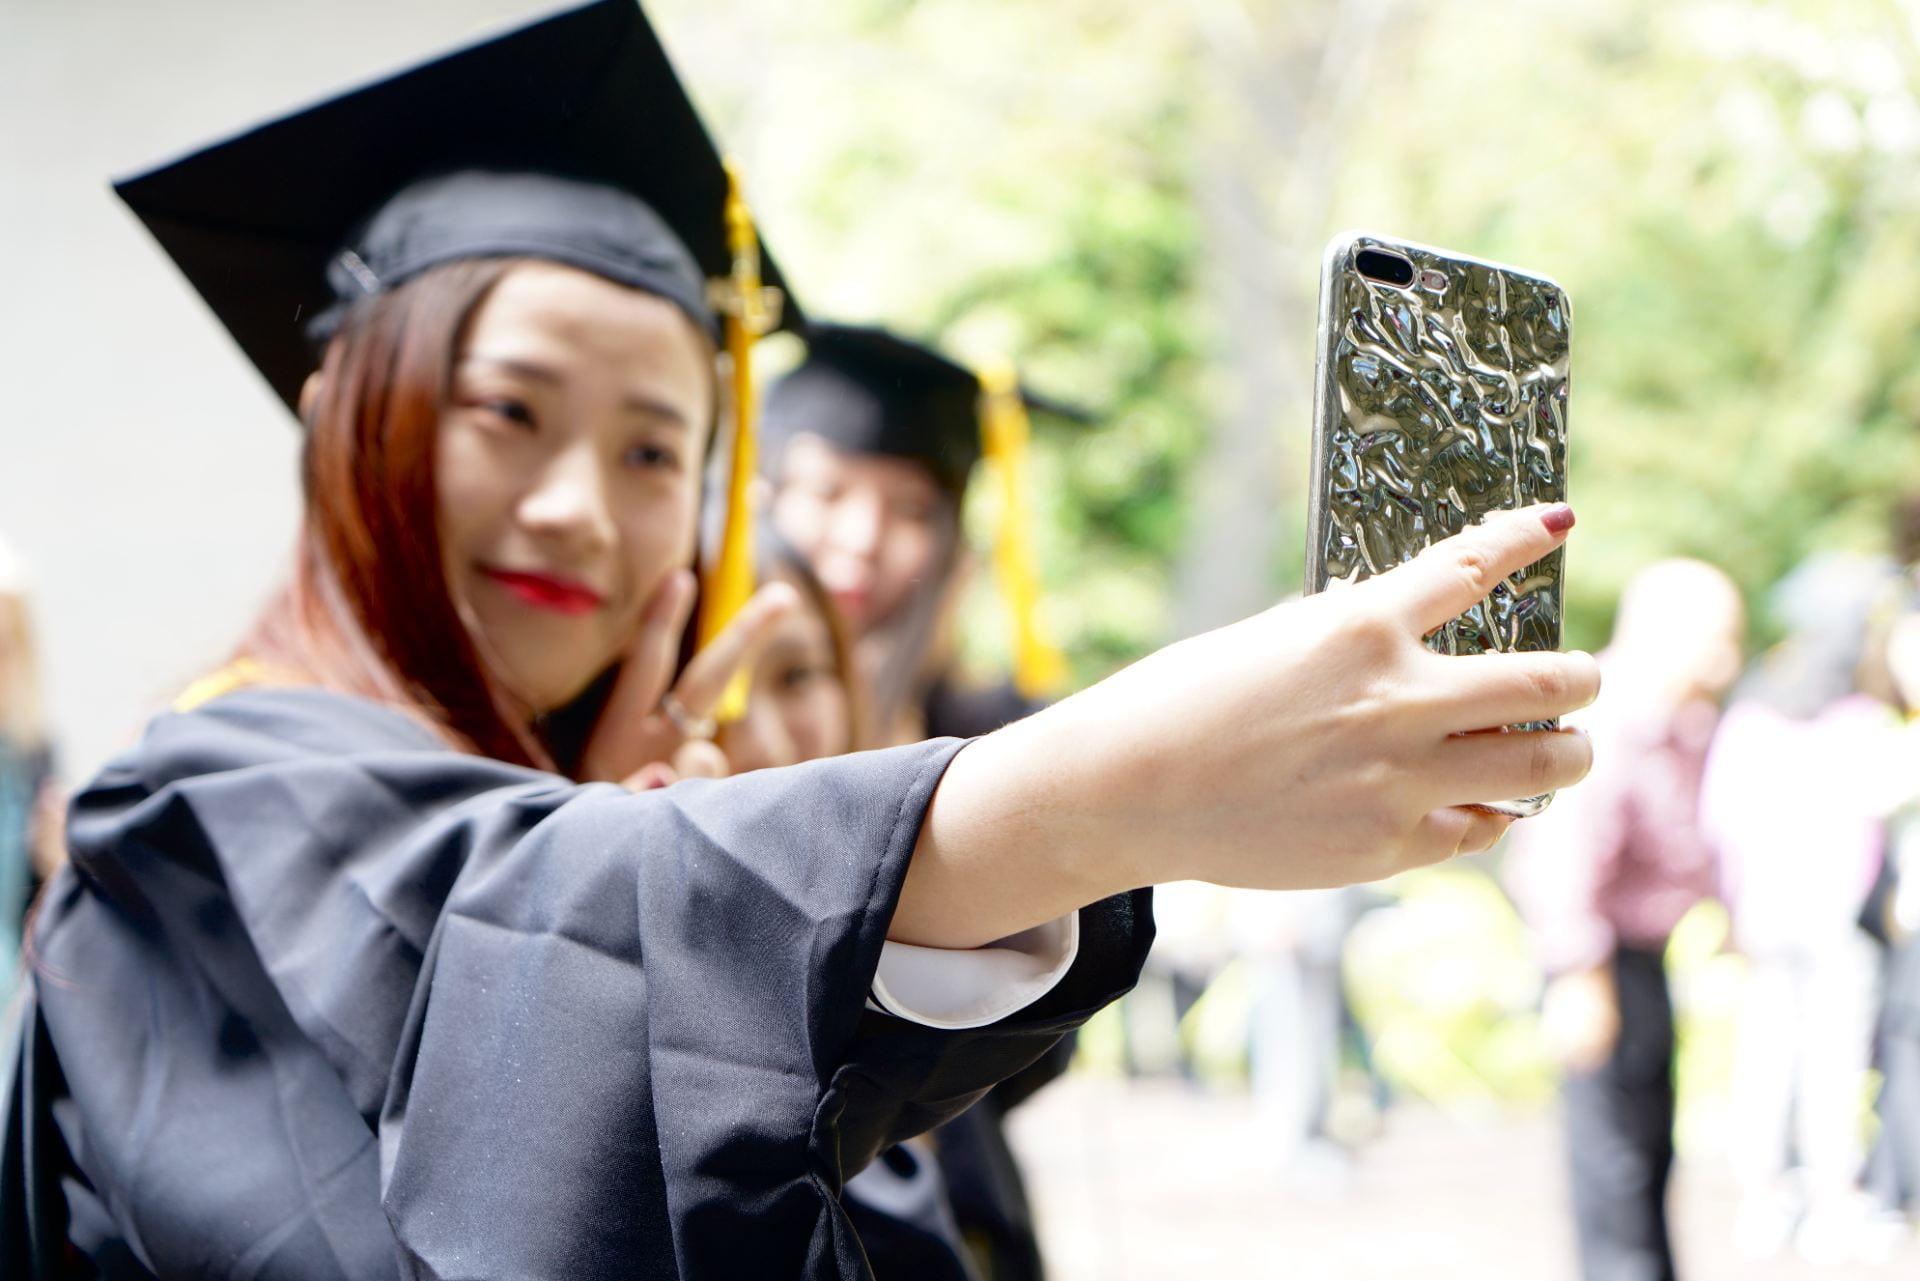 Woman in regalia holding phone taking a selfie